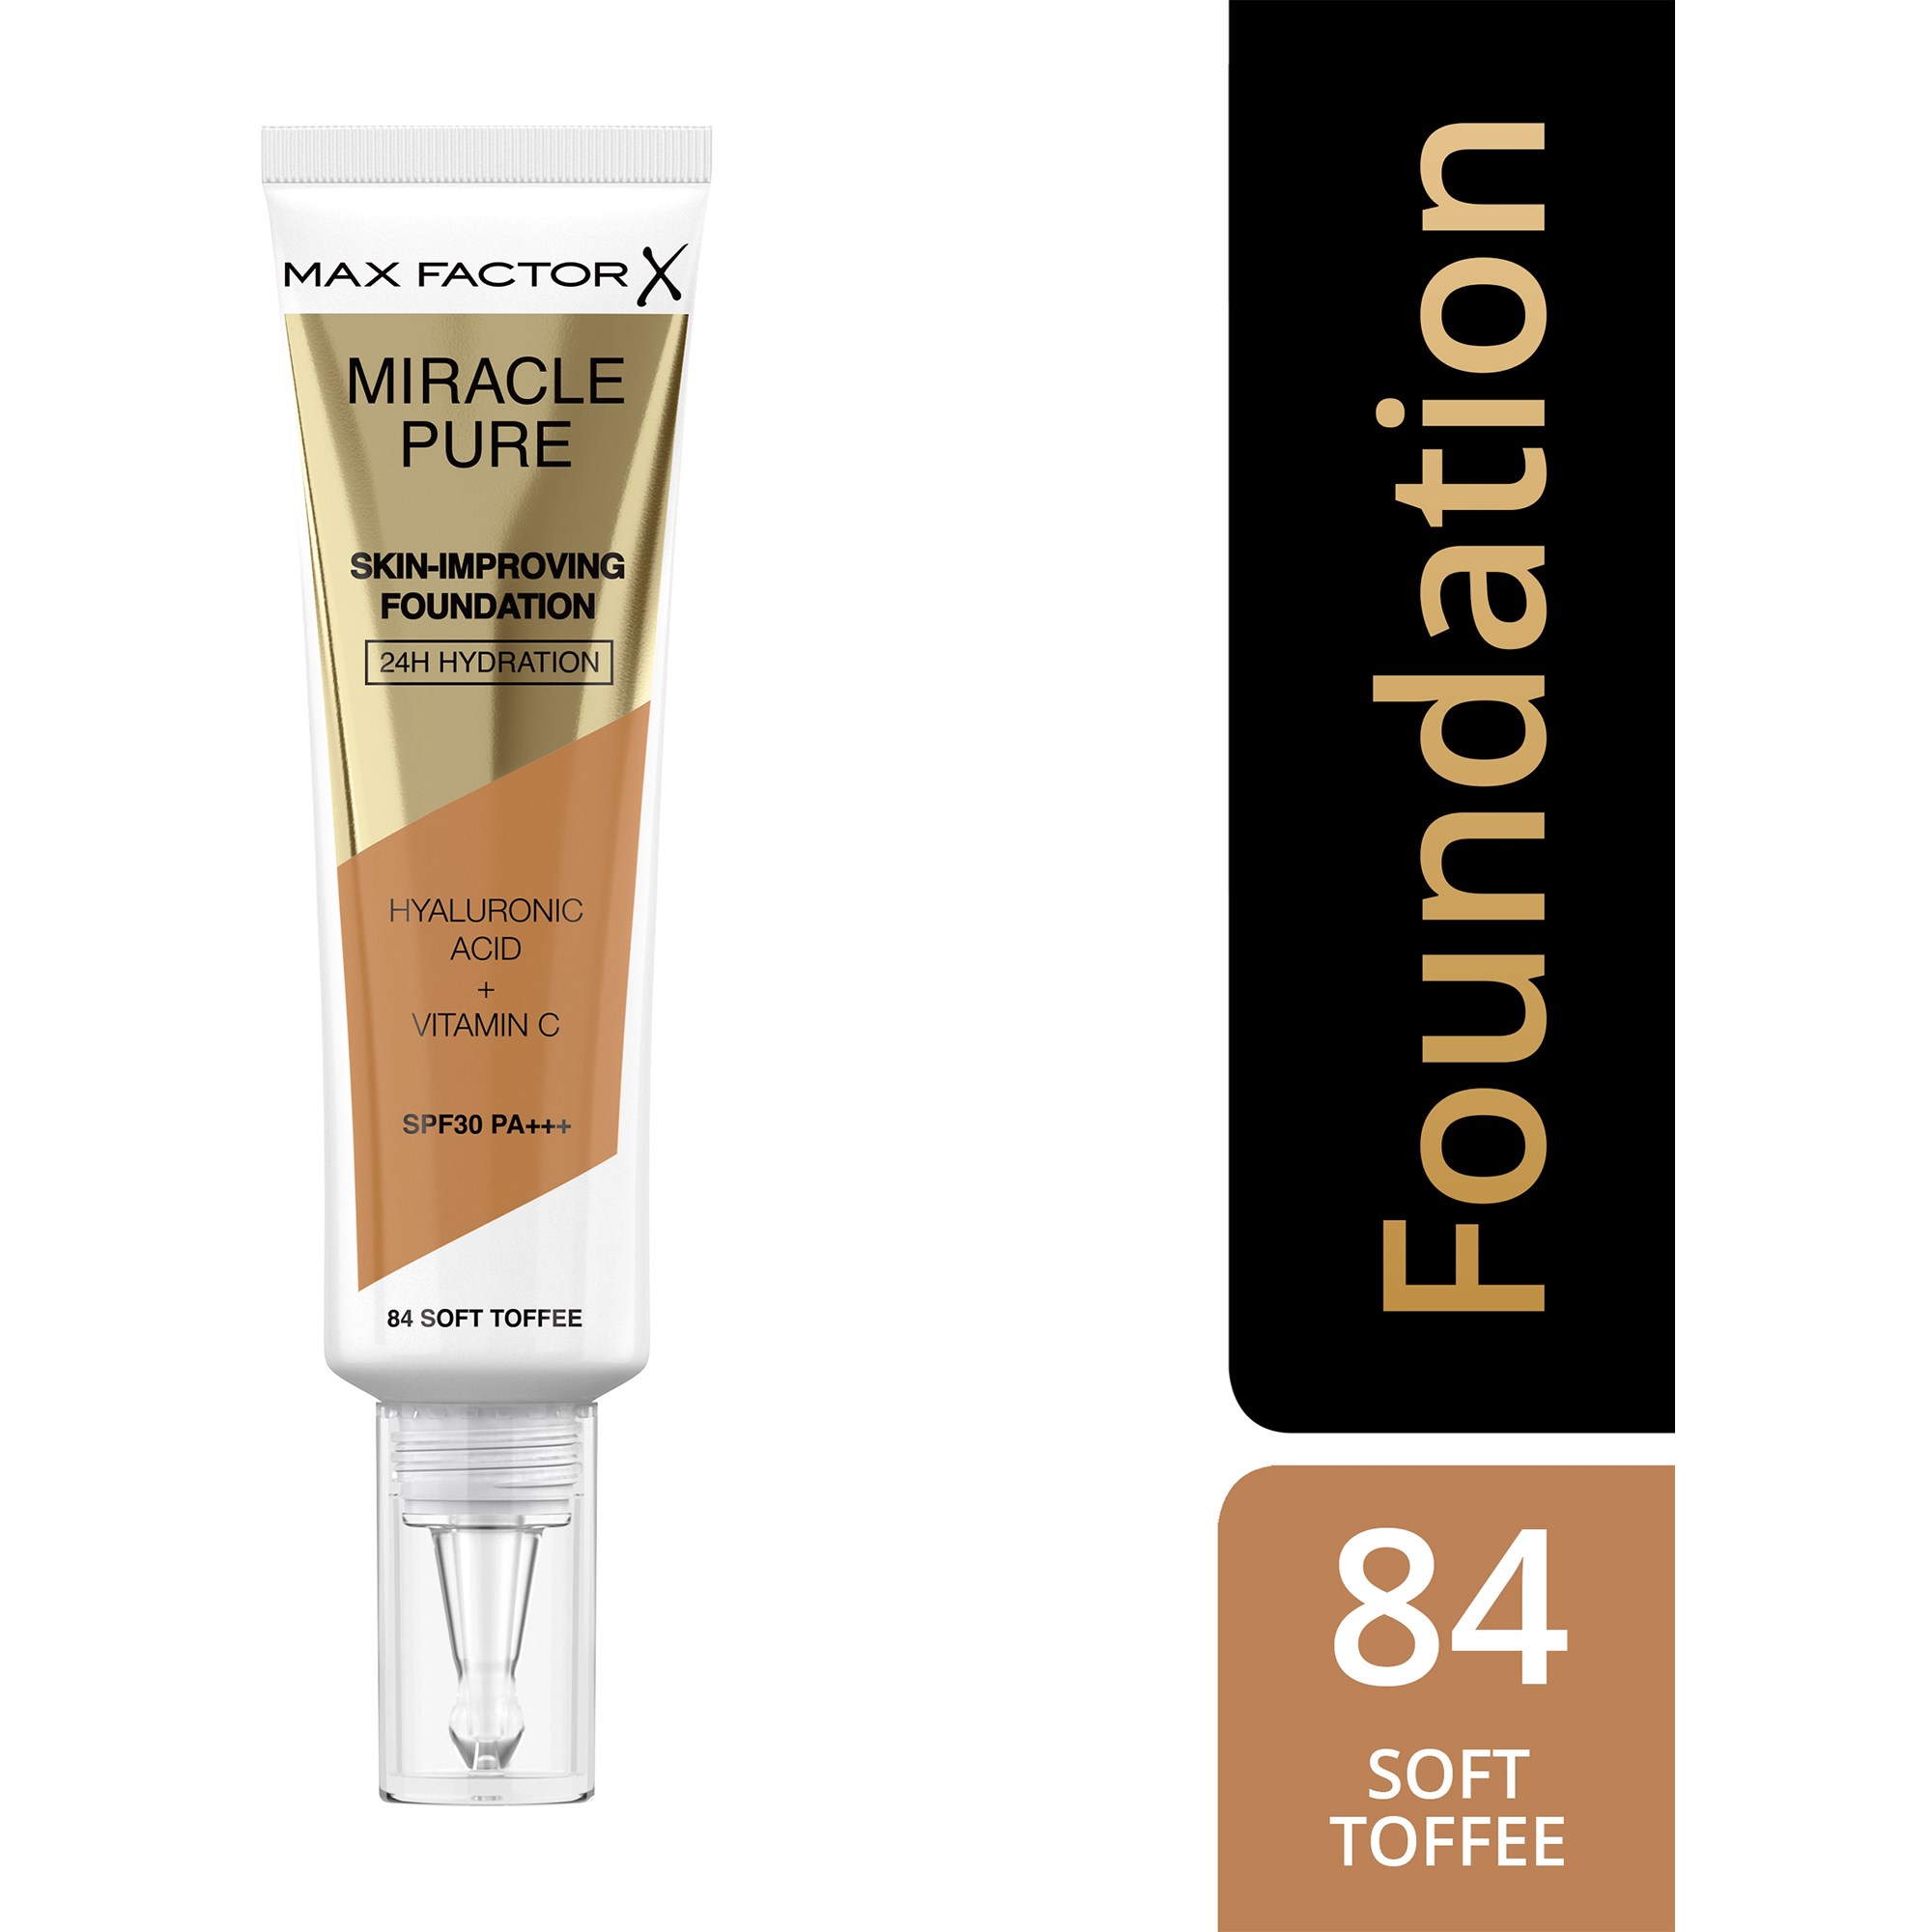 Bilde av Max Factor Miracle Pure Skin-improving Foundation 84 Soft Toffee